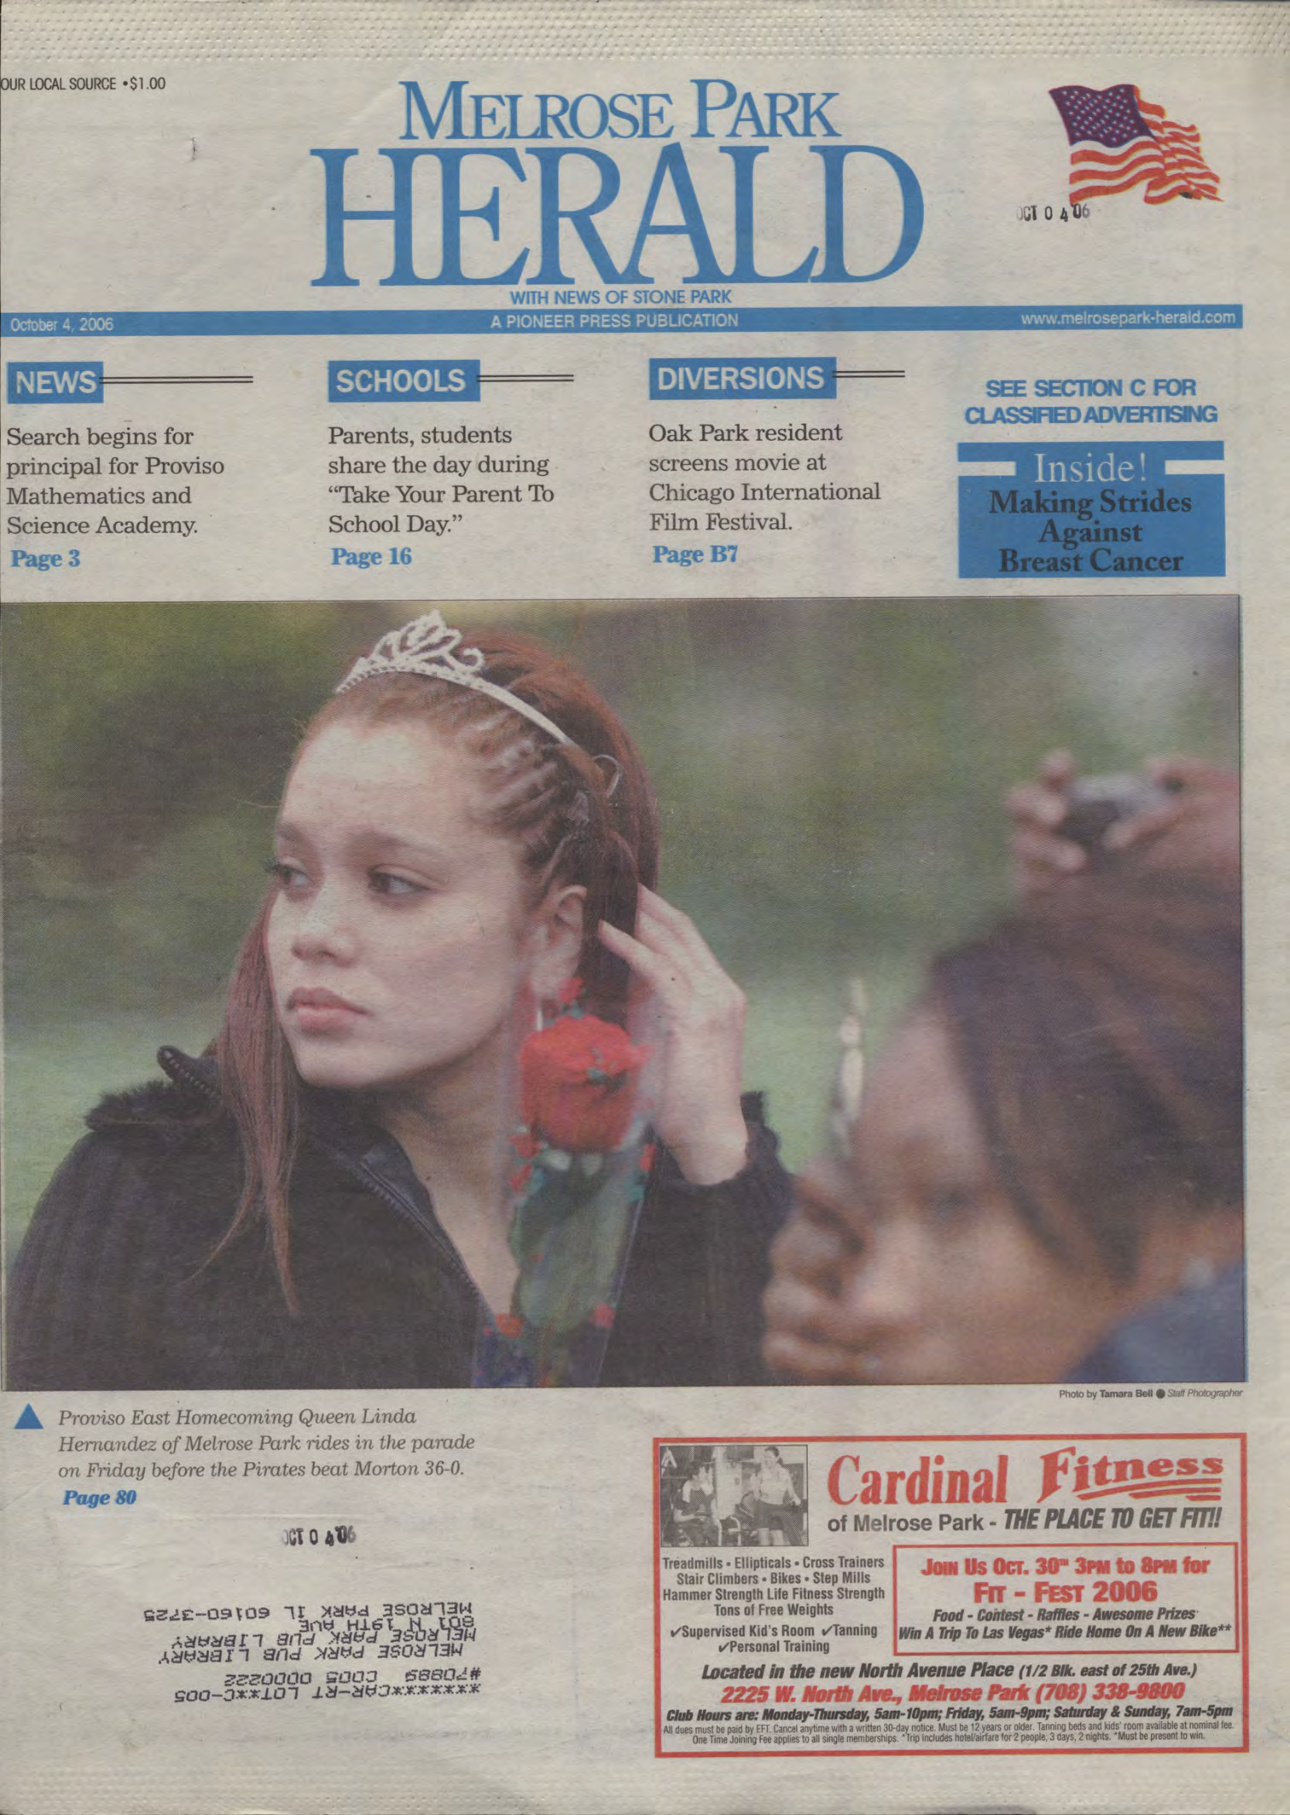 The Herald – 20061004